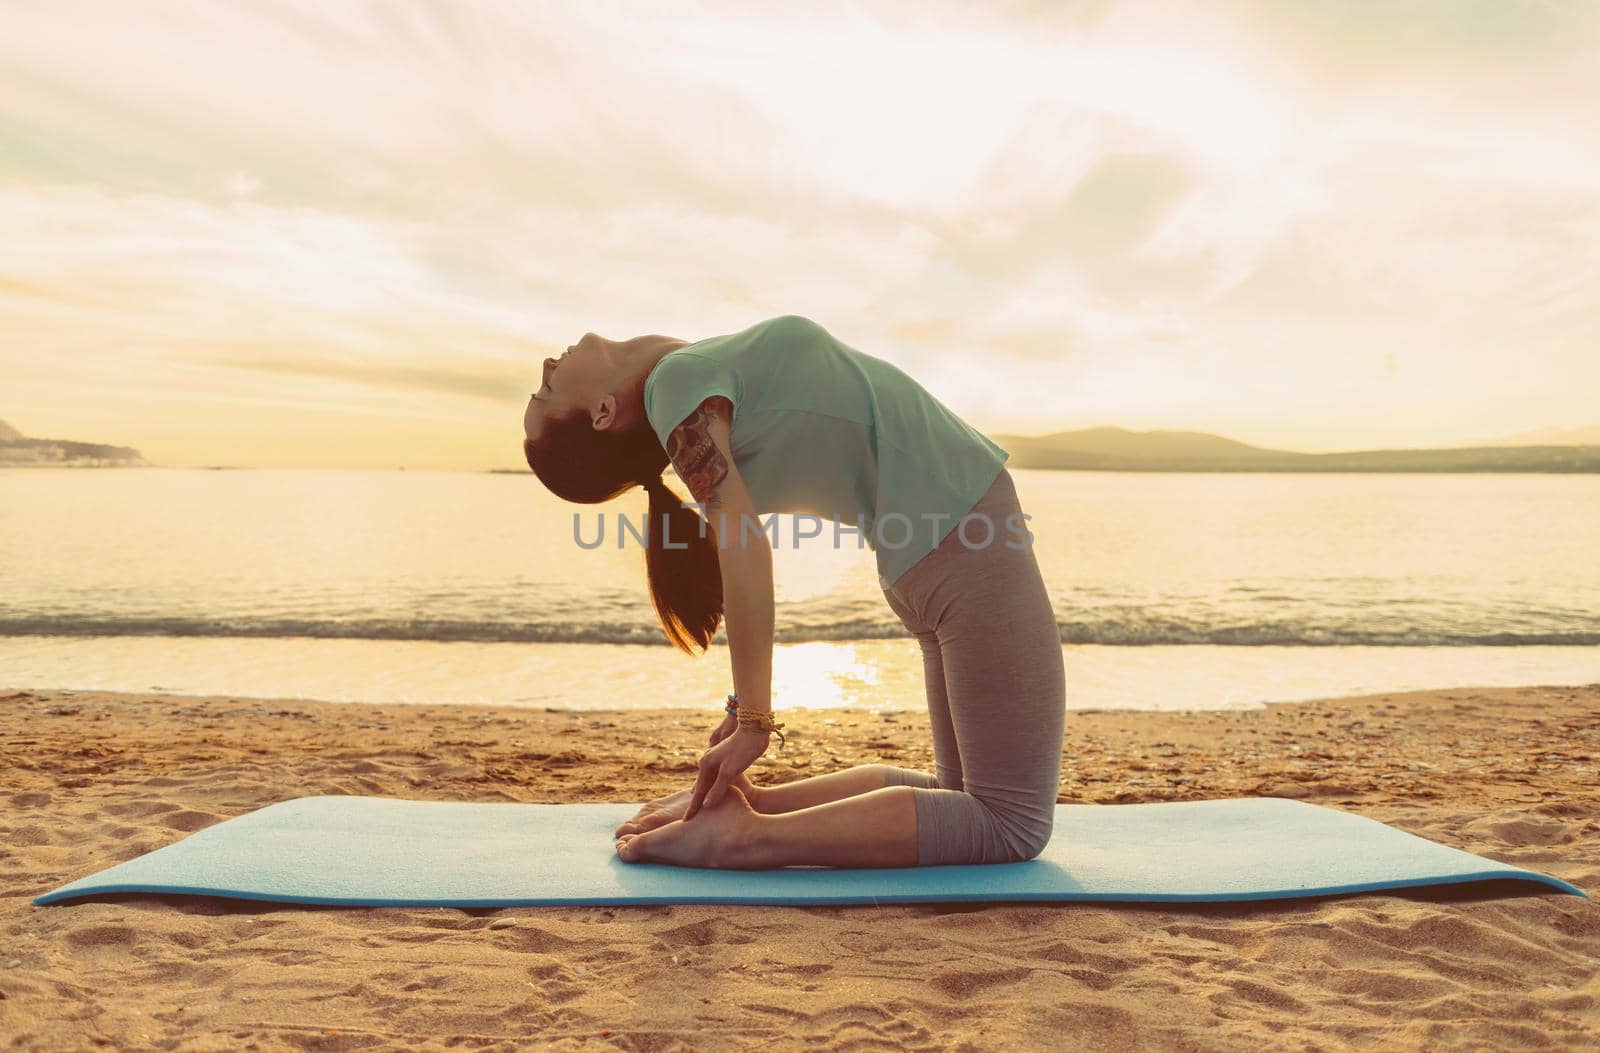 Girl doing yoga exercise on beach at sunset by alexAleksei